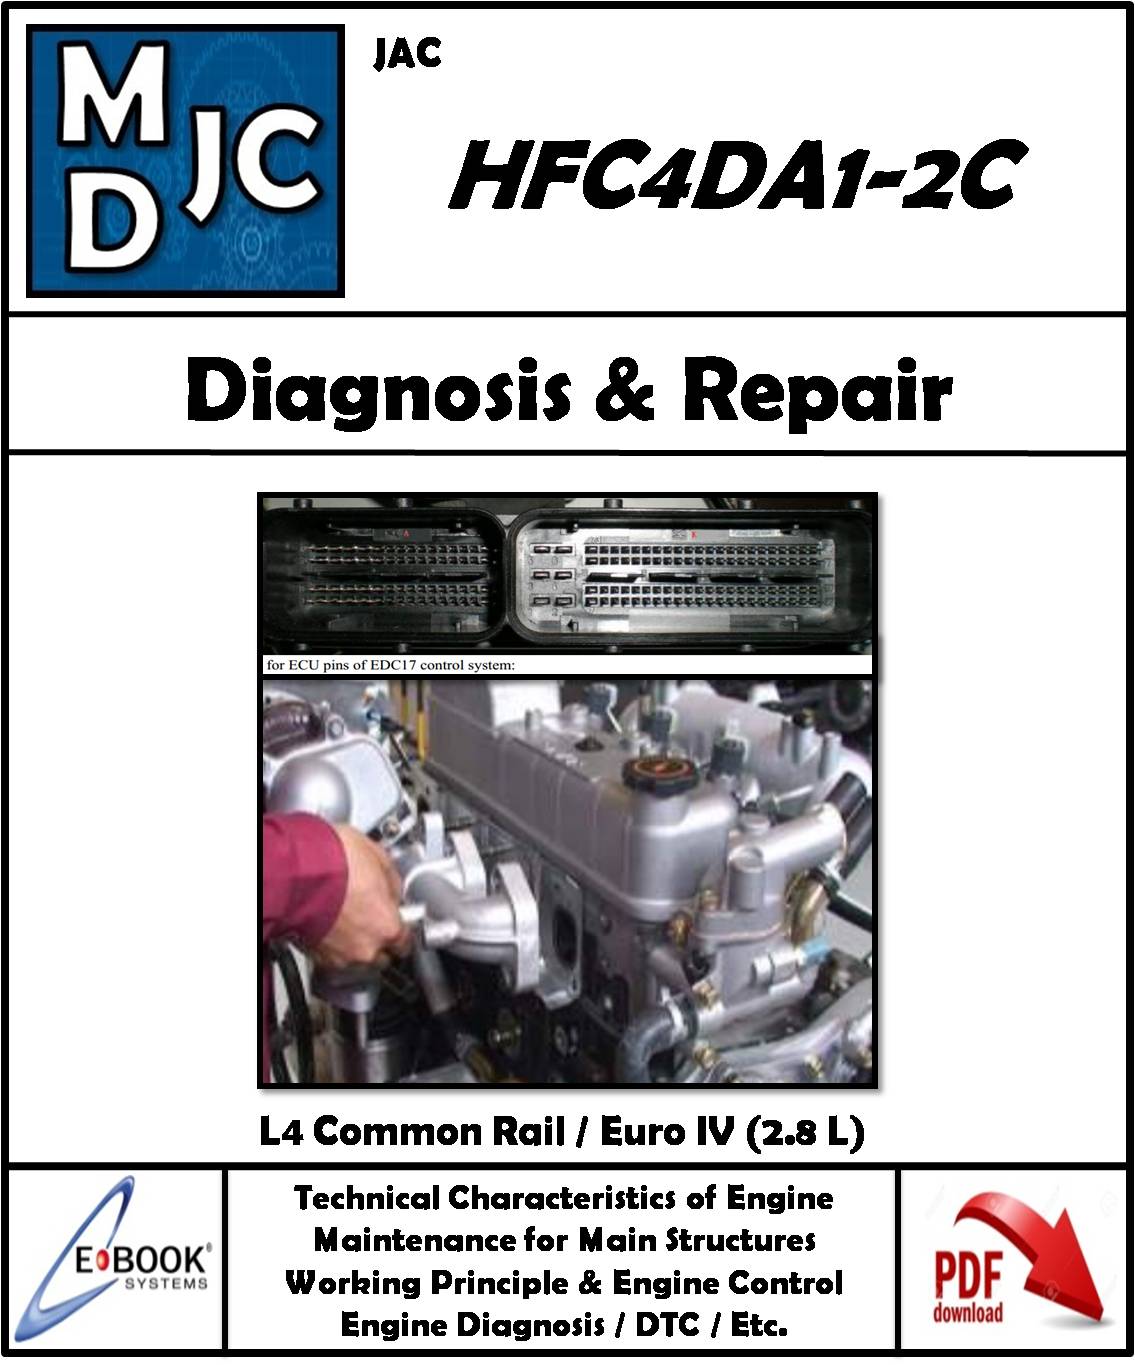 Jac HFC4DA1-2C ( L4 2.8 L / Common Rail / Euro IV )